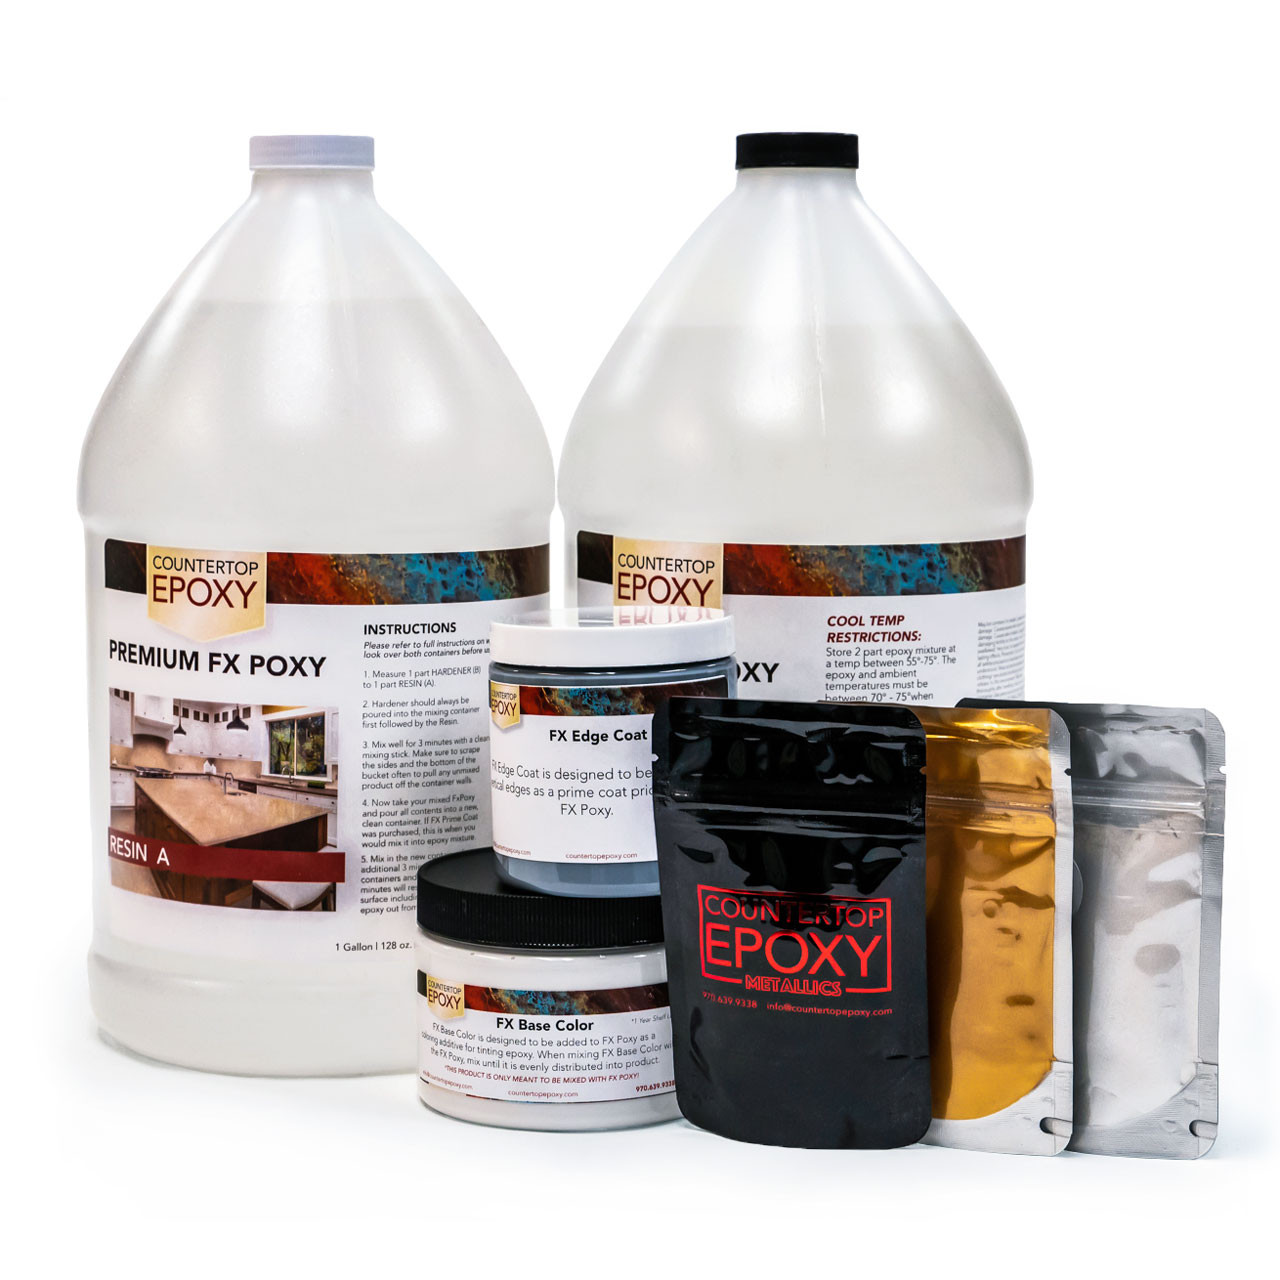 Bar & Table Top Epoxy Resin - 1 Gallon Kit